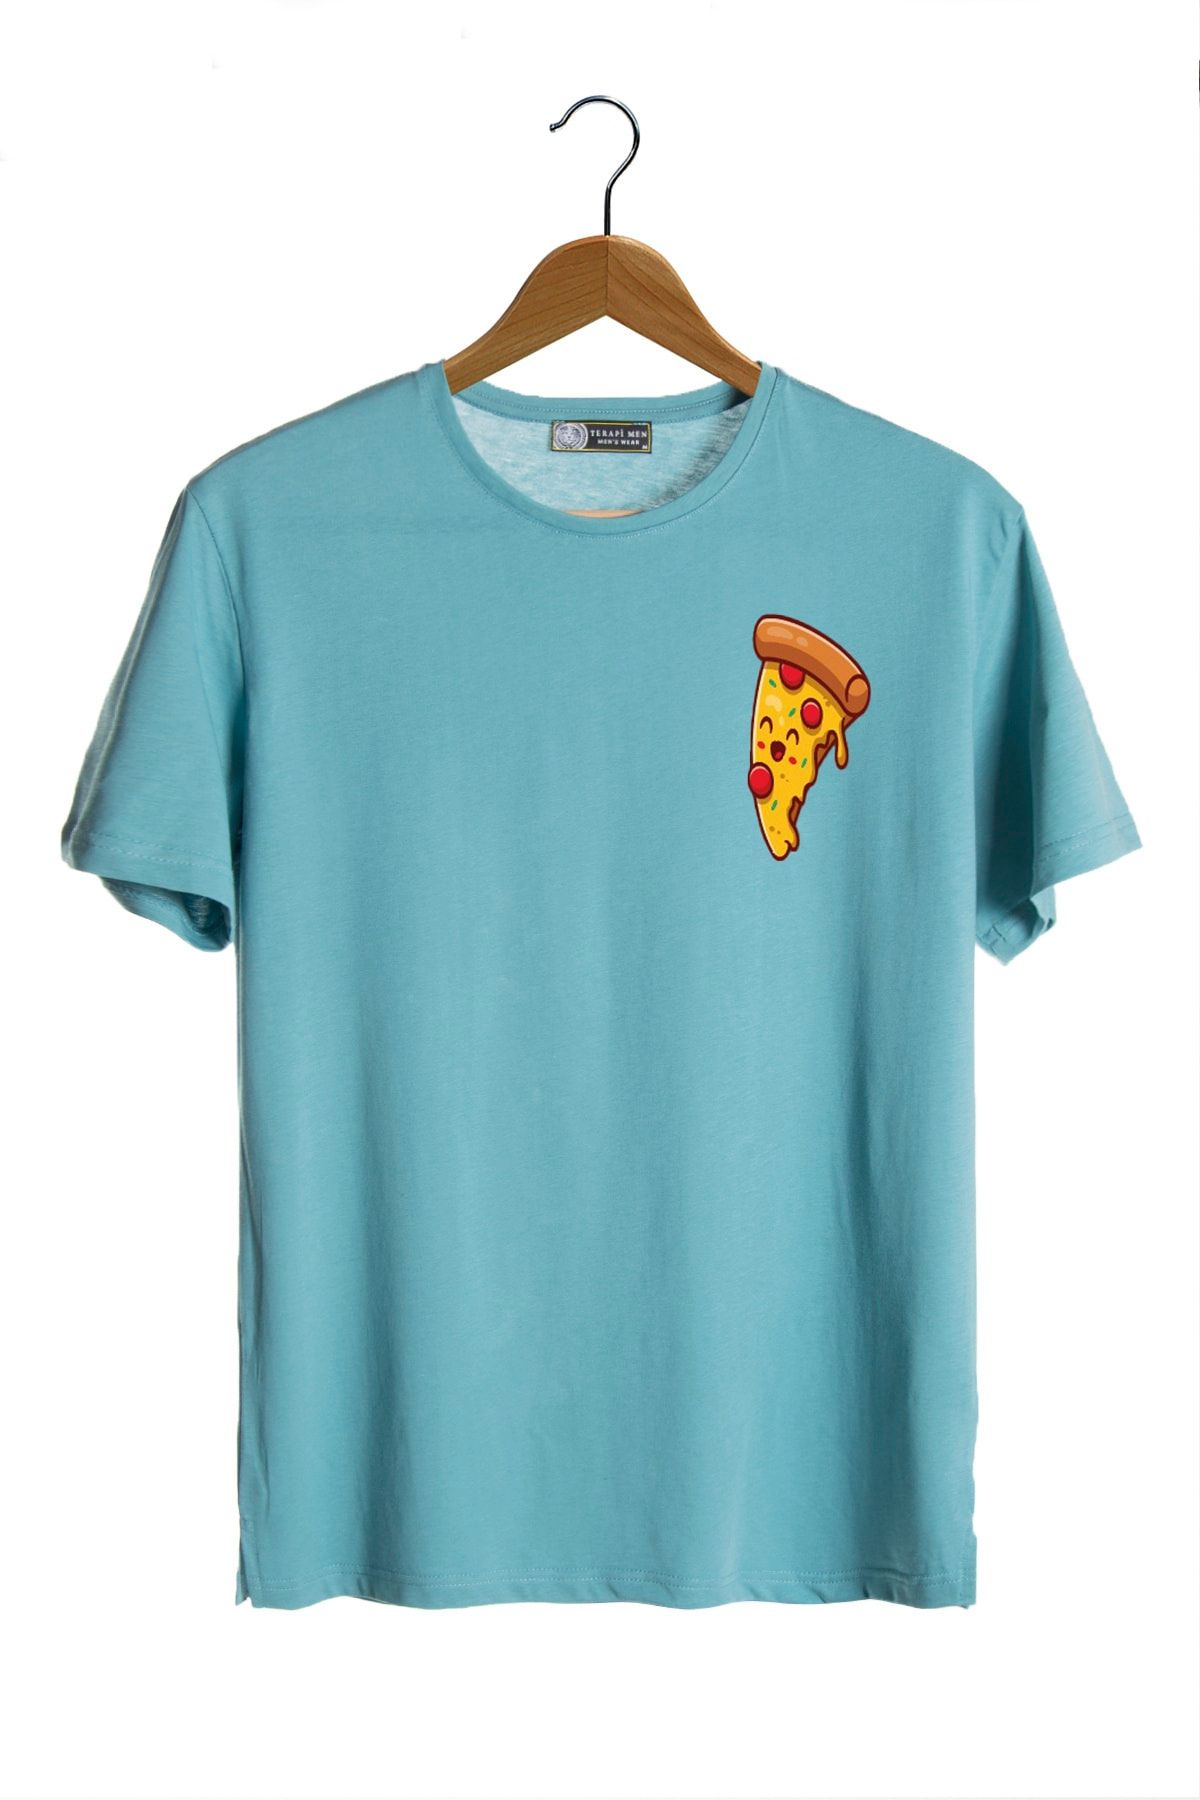 VEAVEN Unisex Turkuaz Bisiklet Yaka Önü Pizza Baskılı Oversize T-shirt